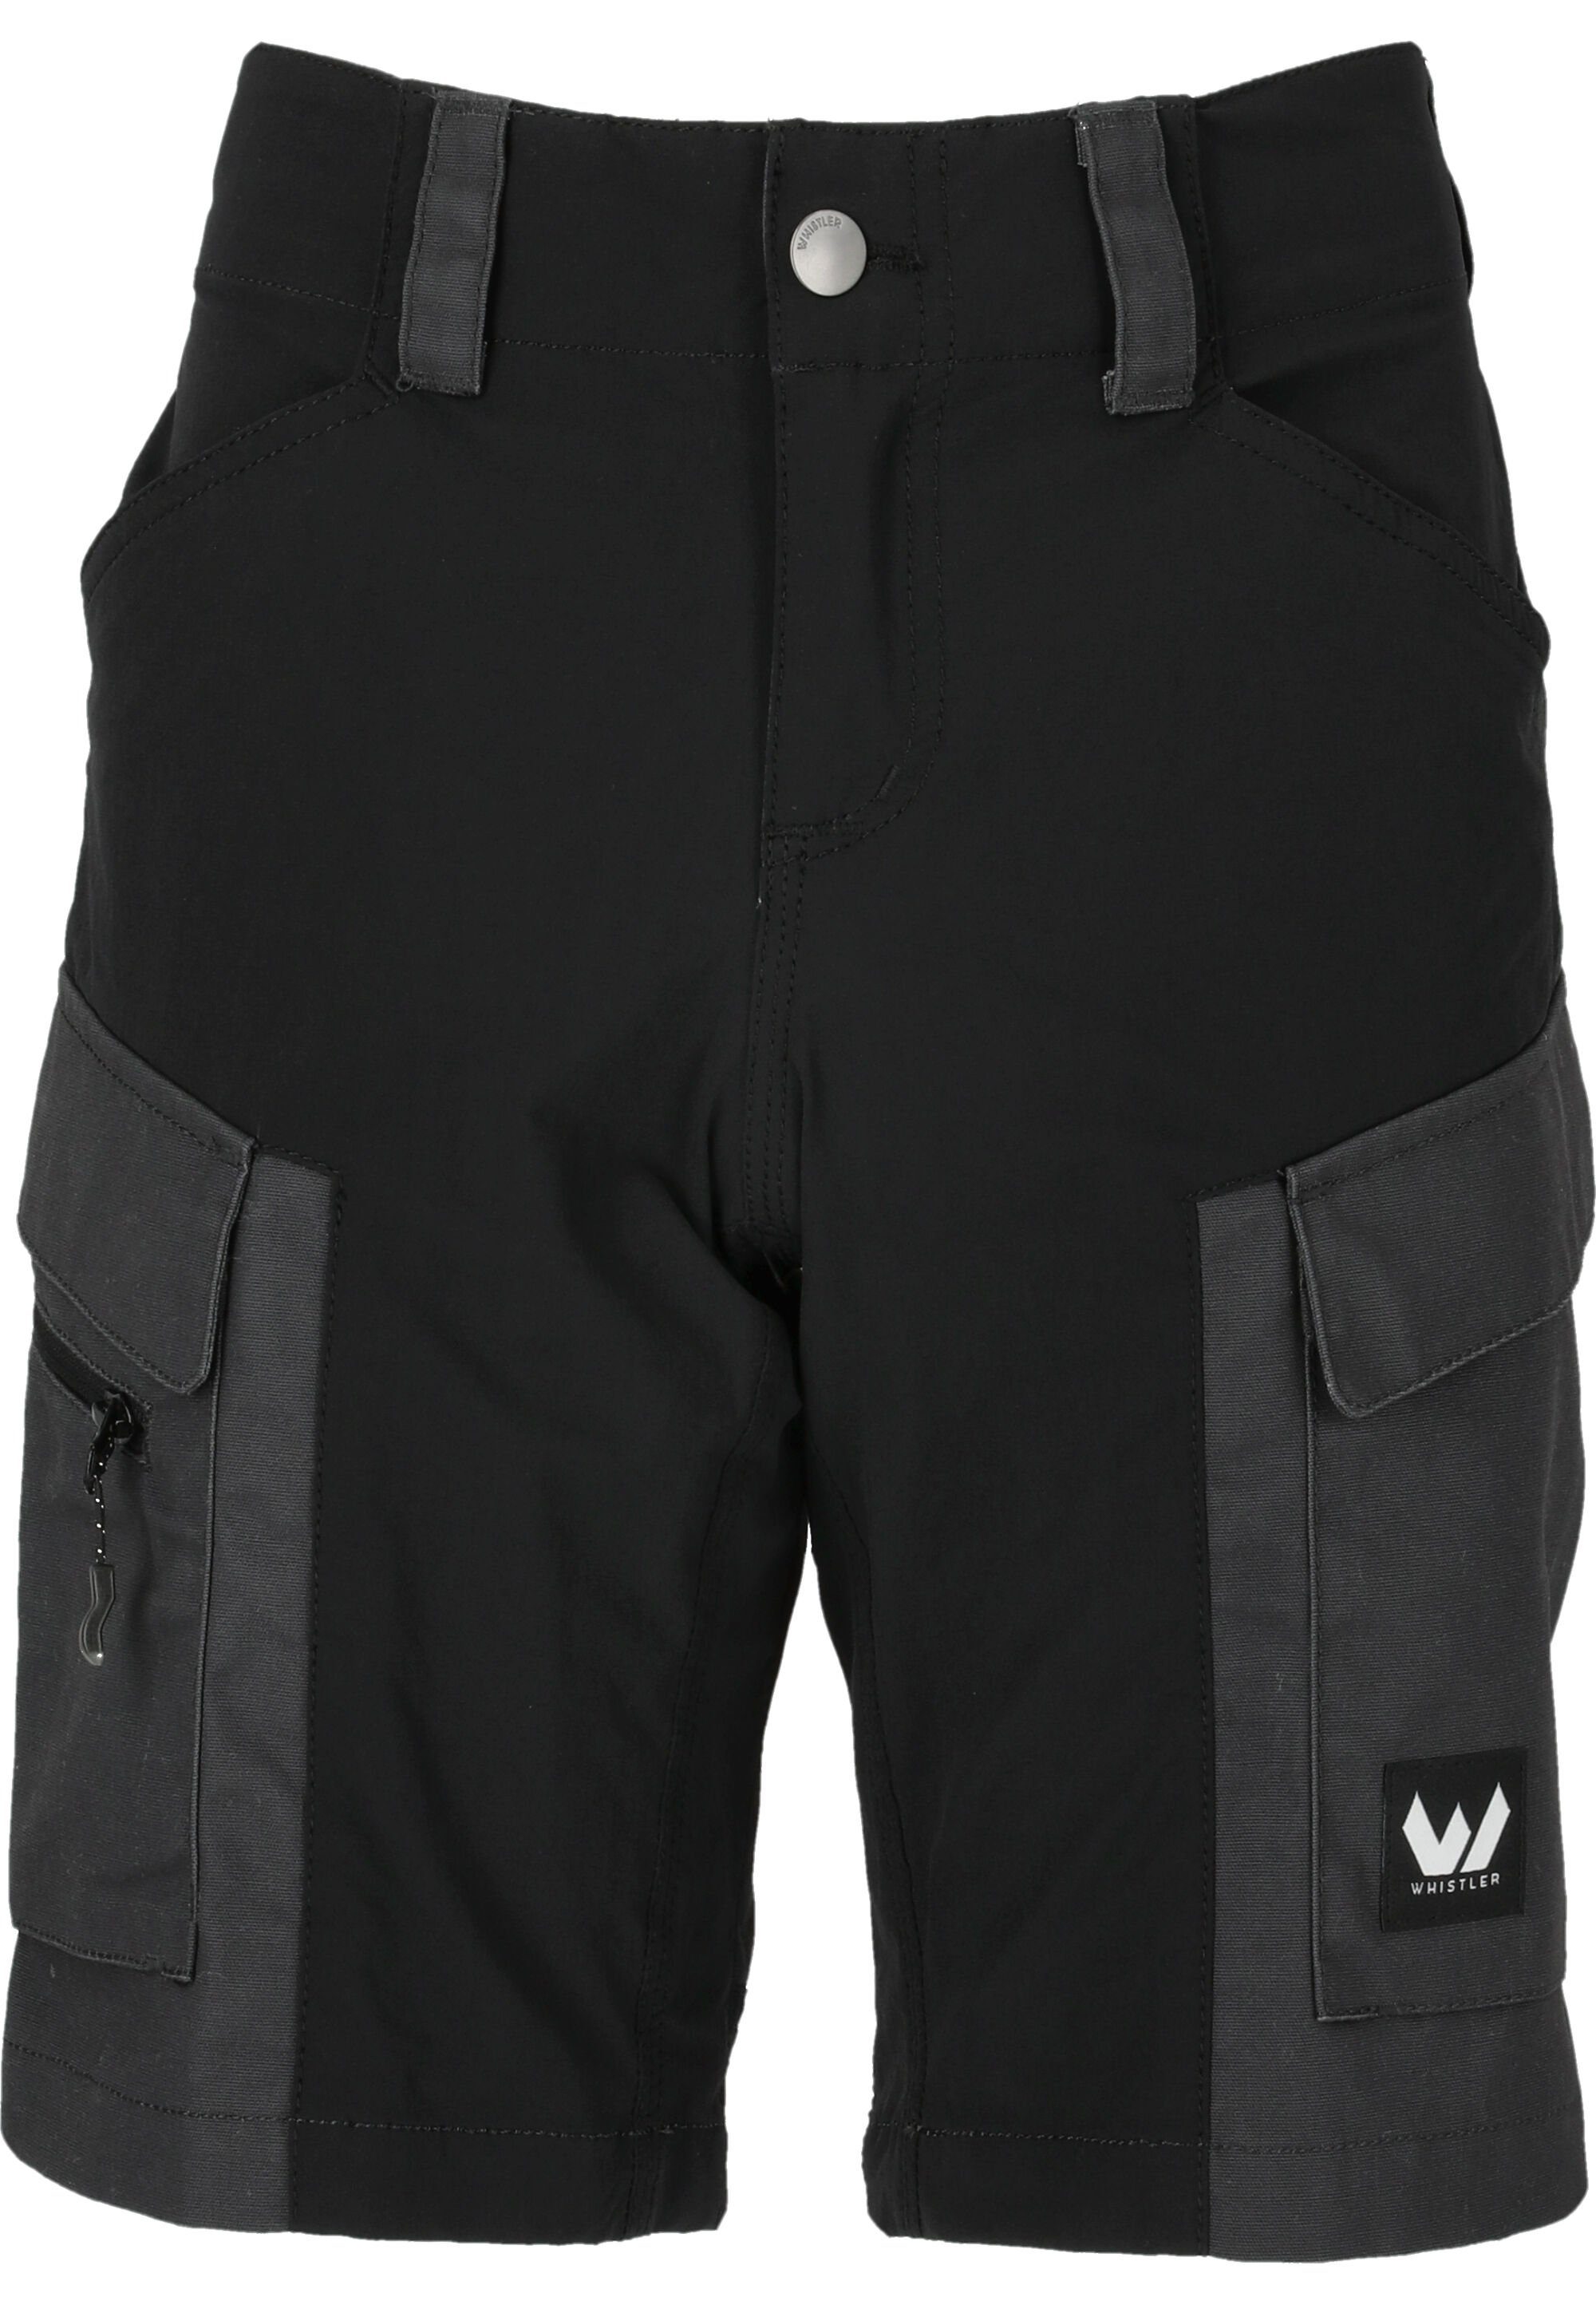 WHISTLER Shorts Rommy mit atmungsaktiver Funktion | Shorts